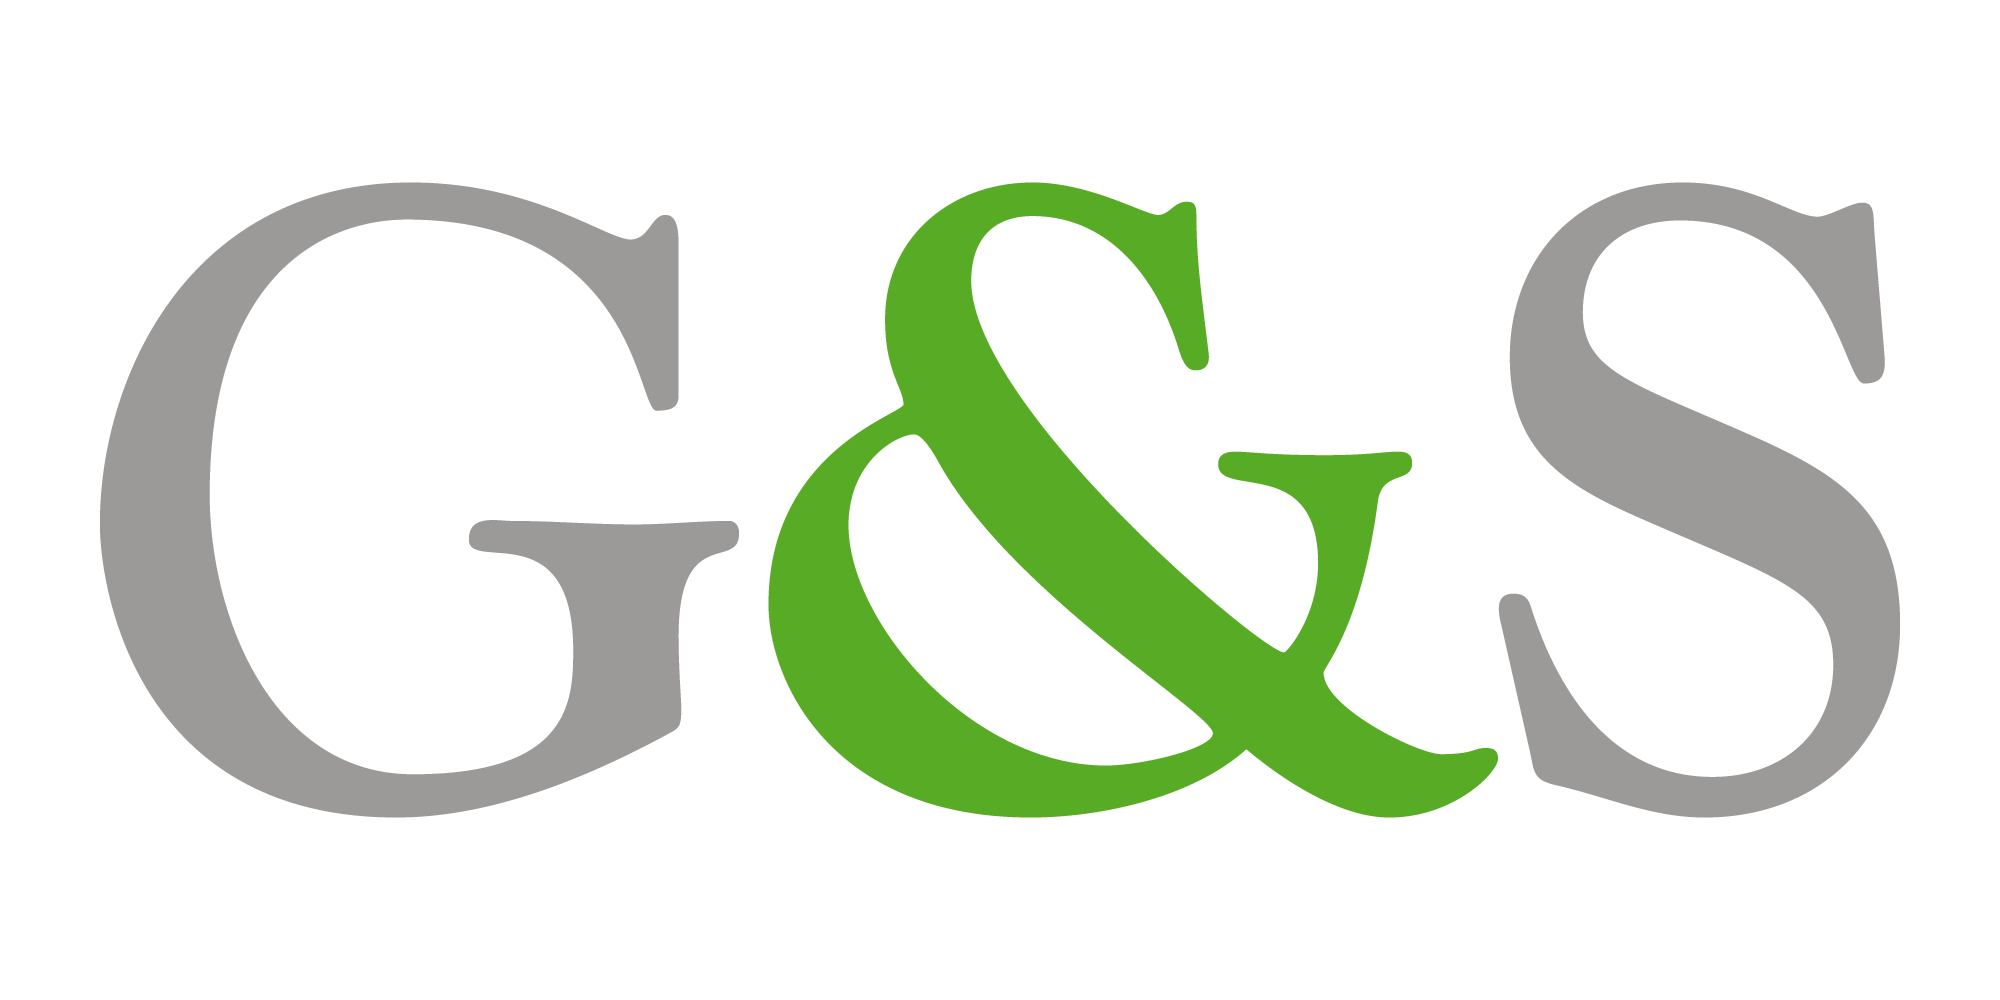 GenS-logo.png